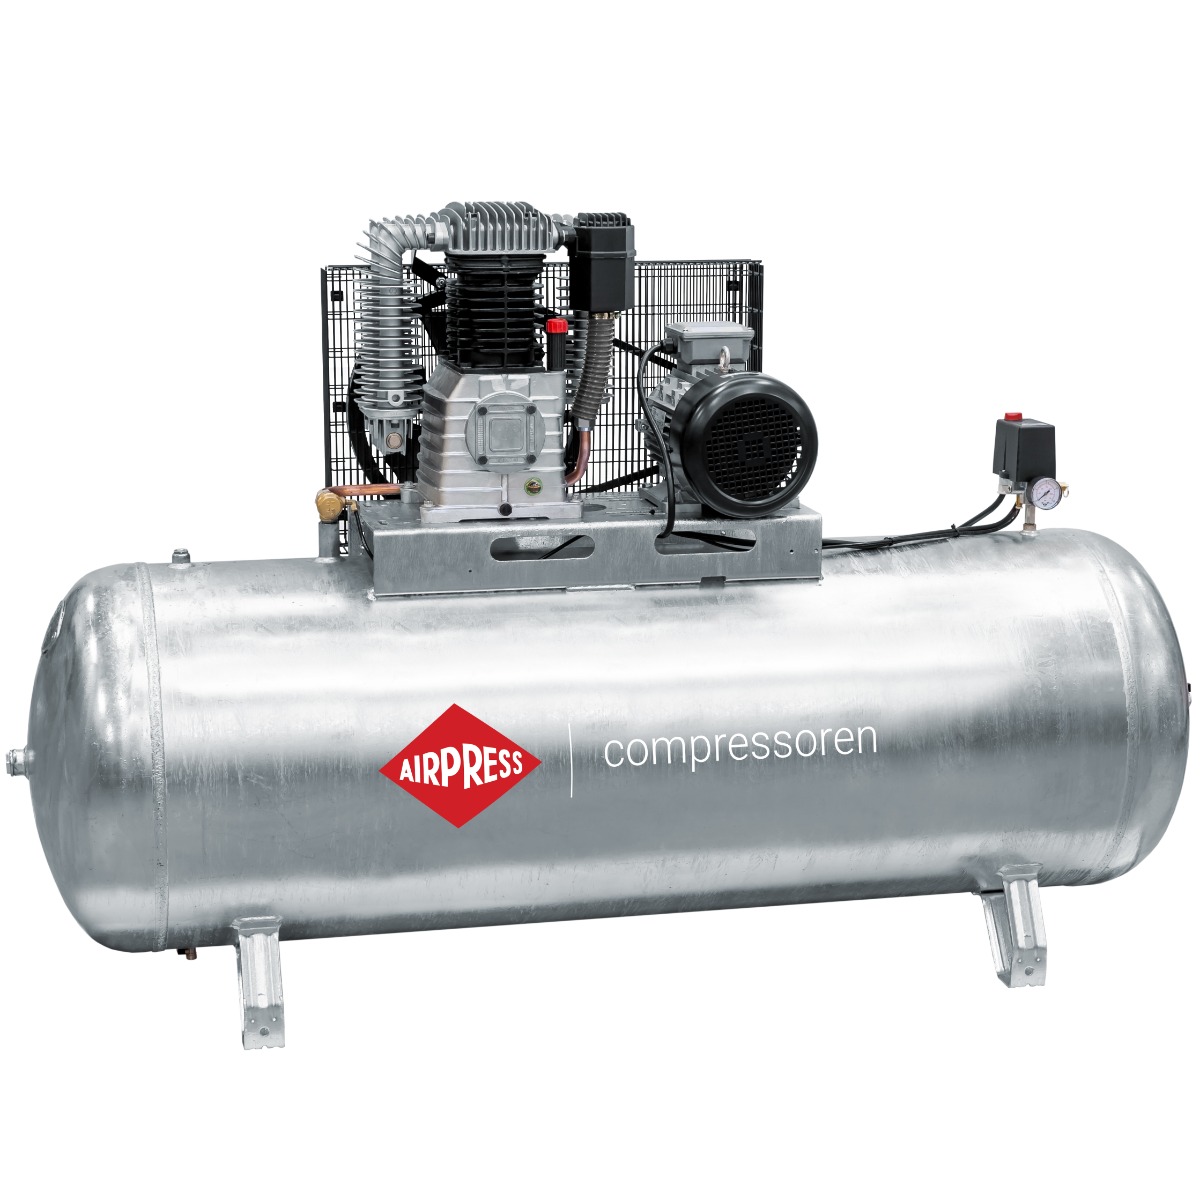 G 1000-500 Pro compressor